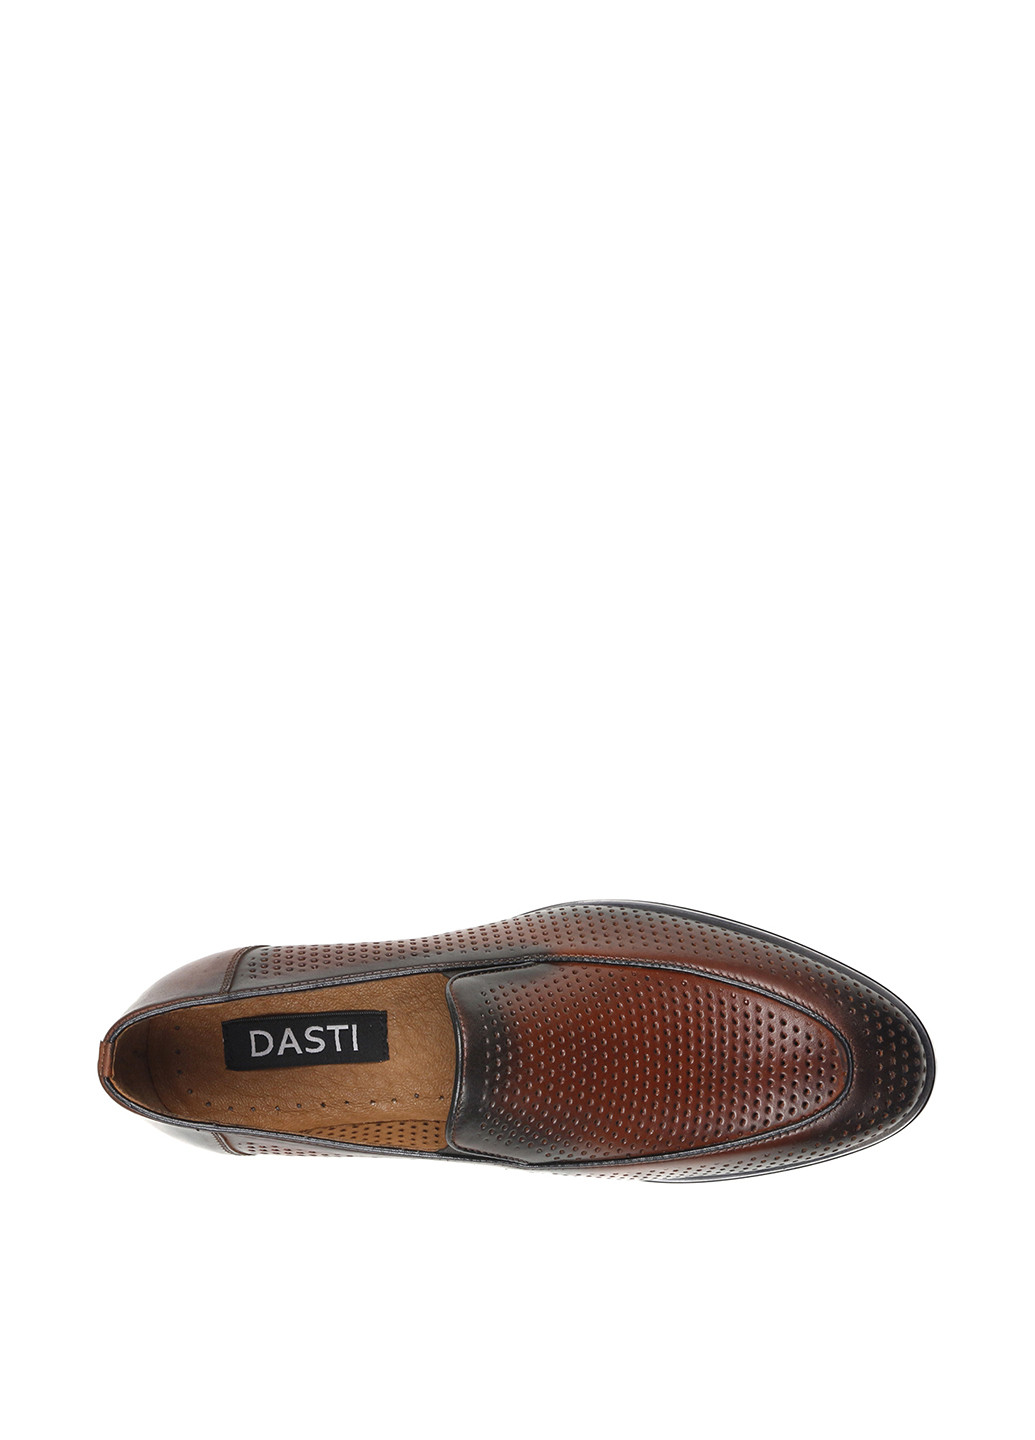 Коричневые классические туфли Dasti на резинке